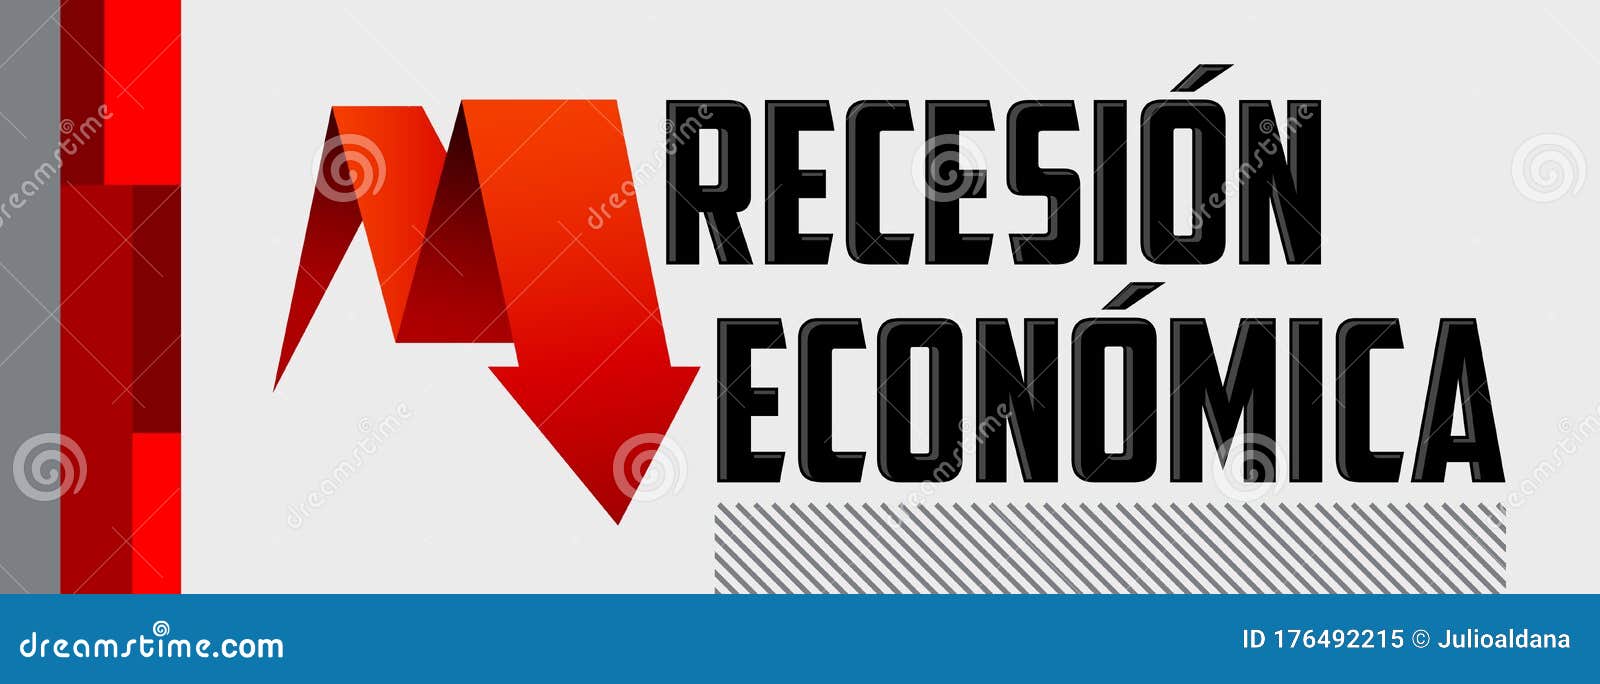 recesion economica, economic recession spanish text  .